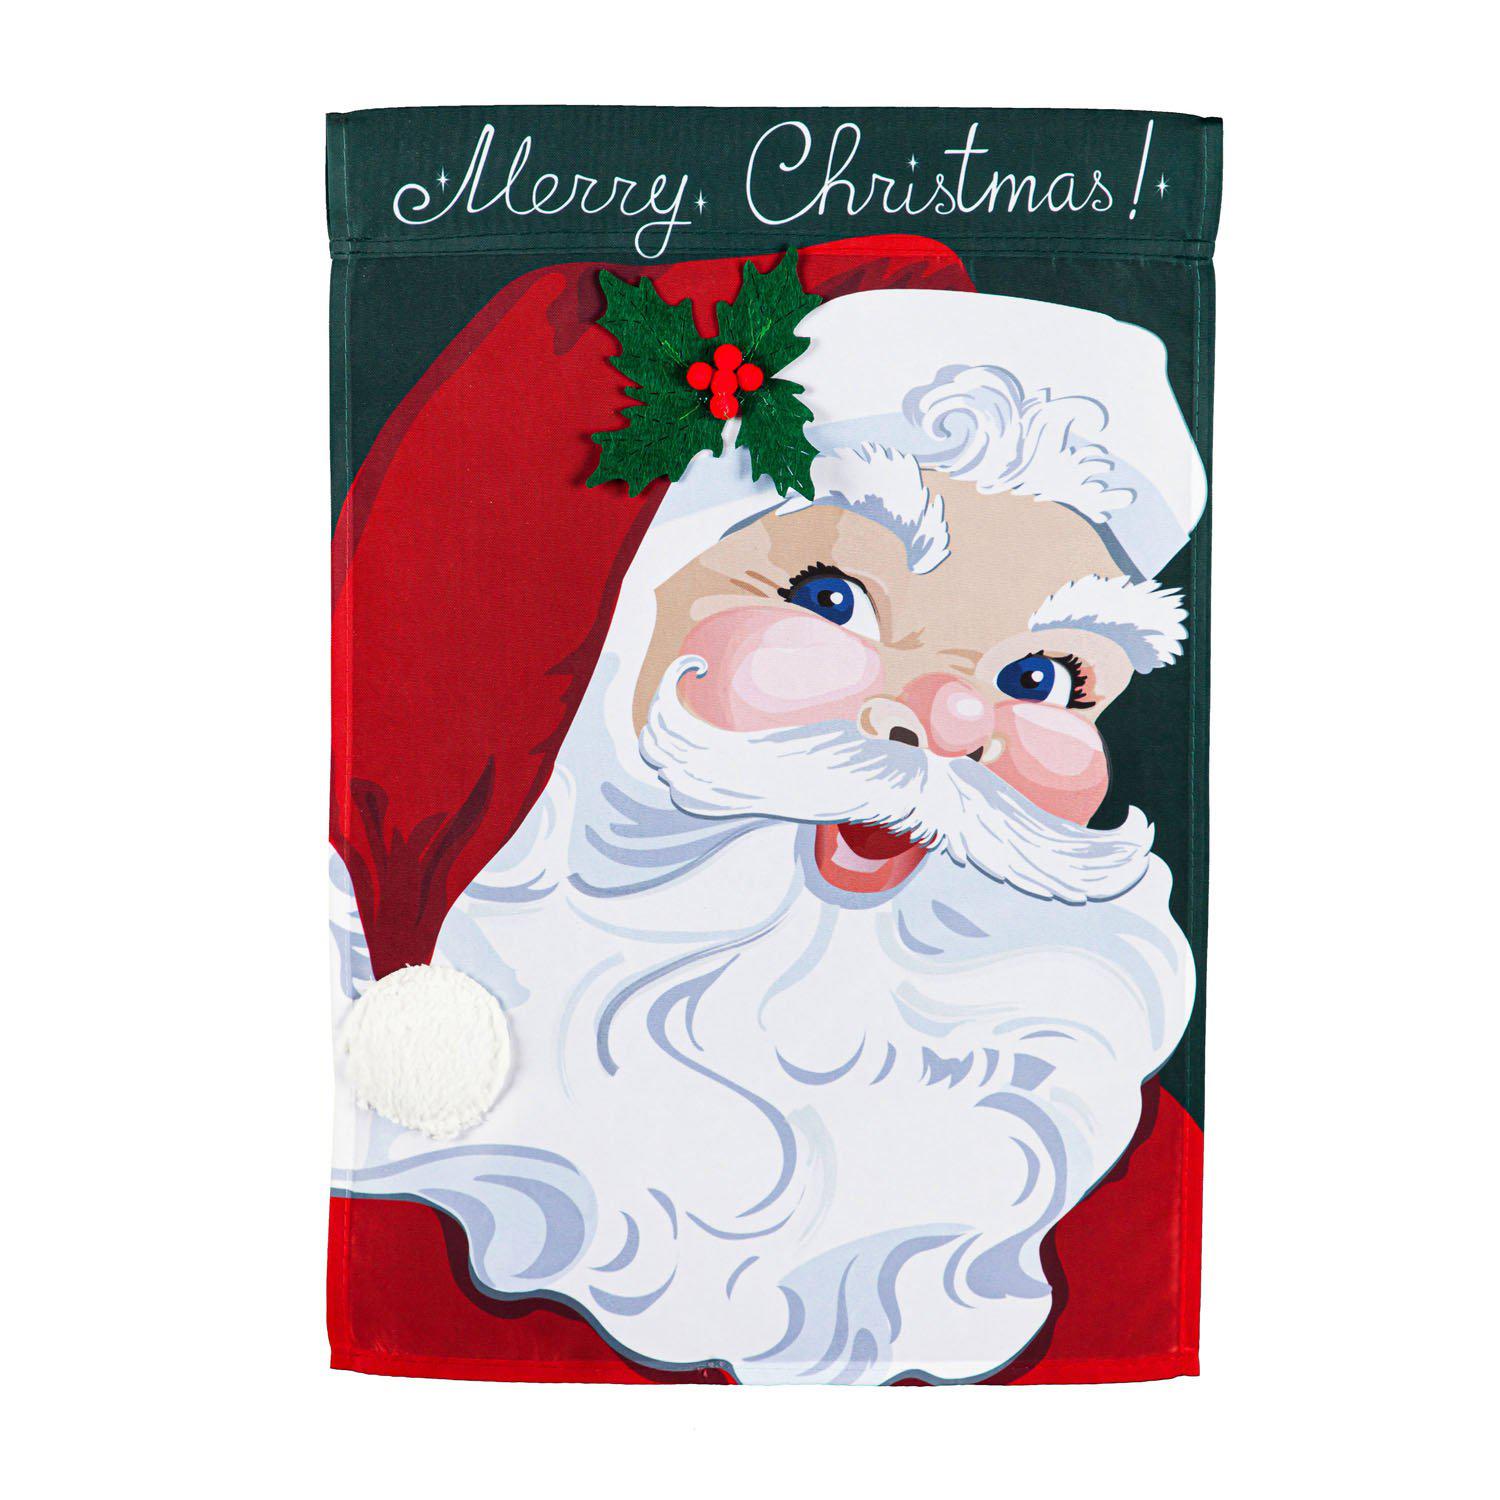 The Vintage Santa garden flag features a jolly Santa and the words "Merry Christmas!". 